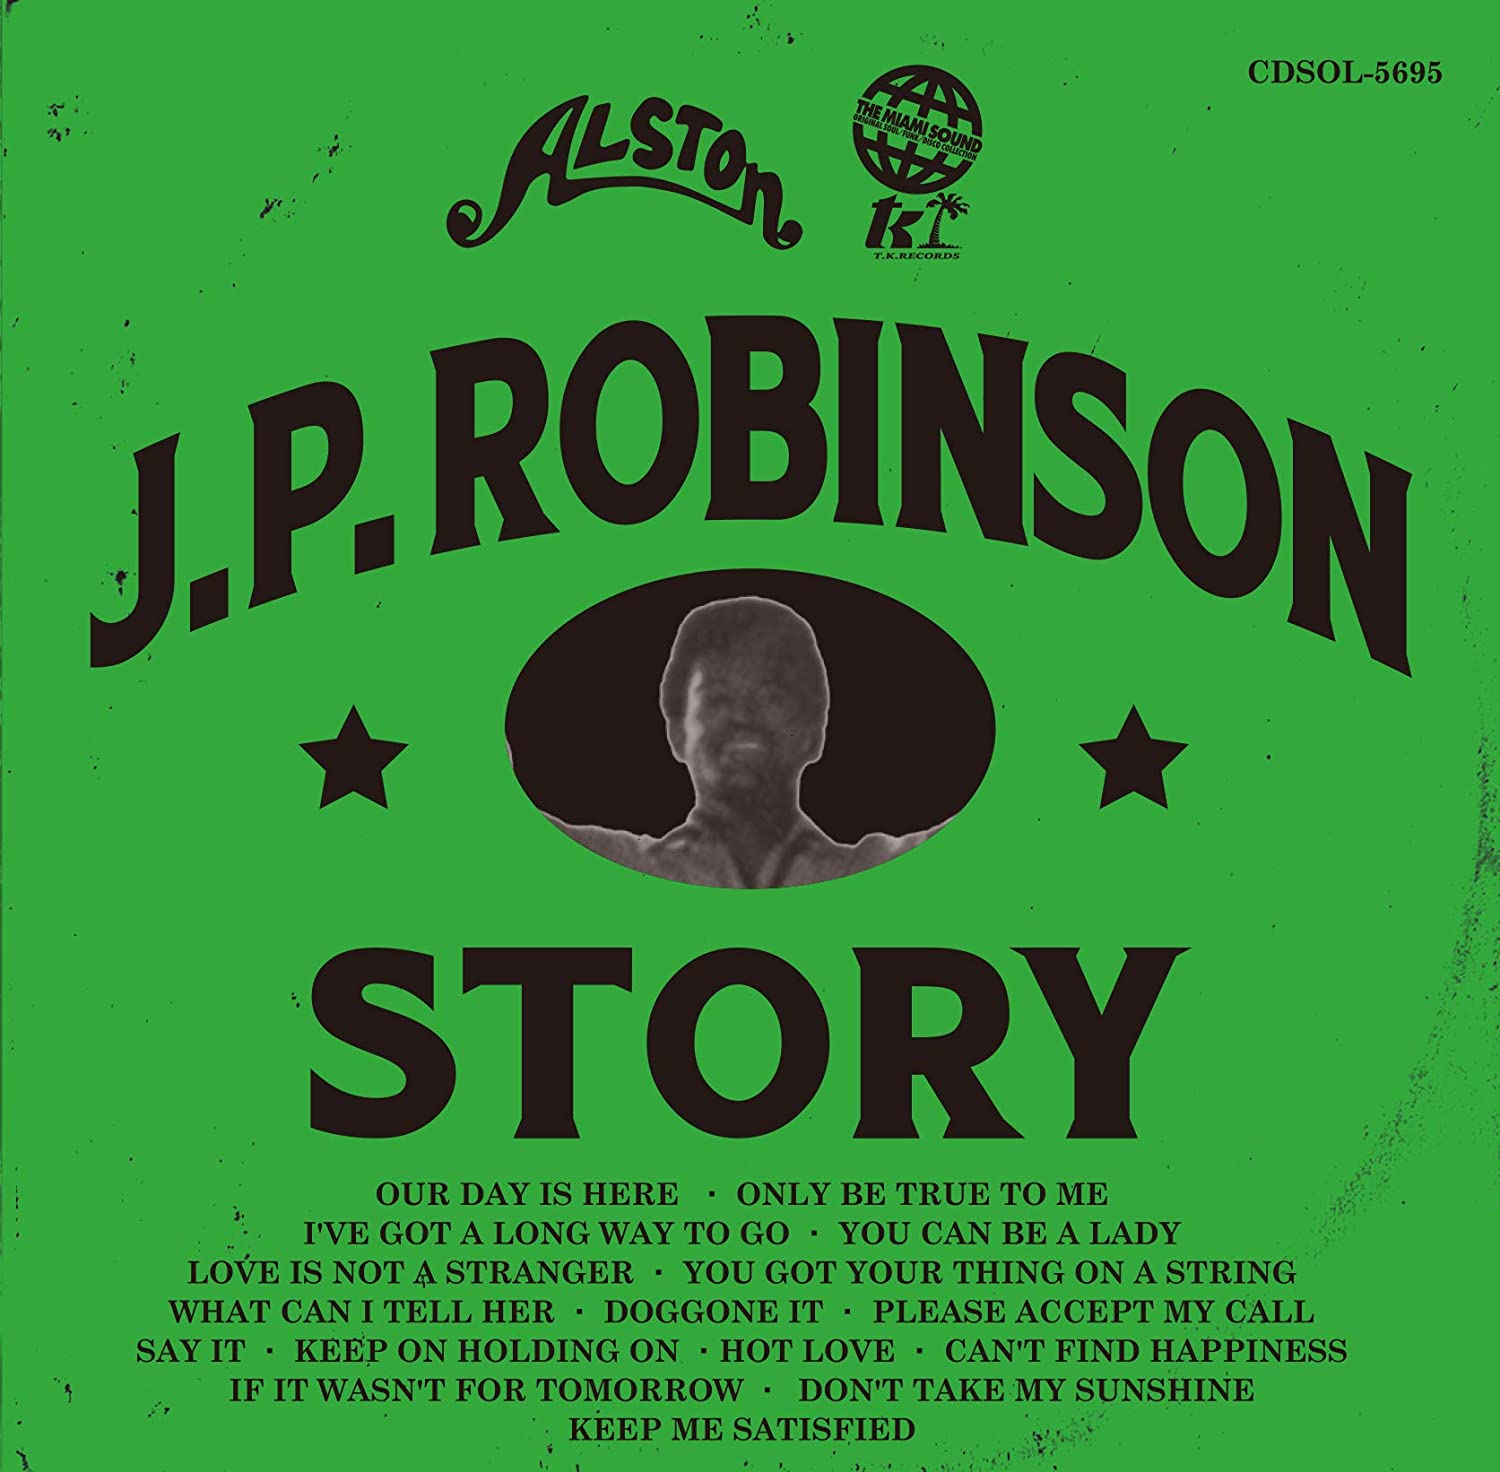 J.P. ROBINSON STORY (COMPILED BY HIROSHI SUZUKI)